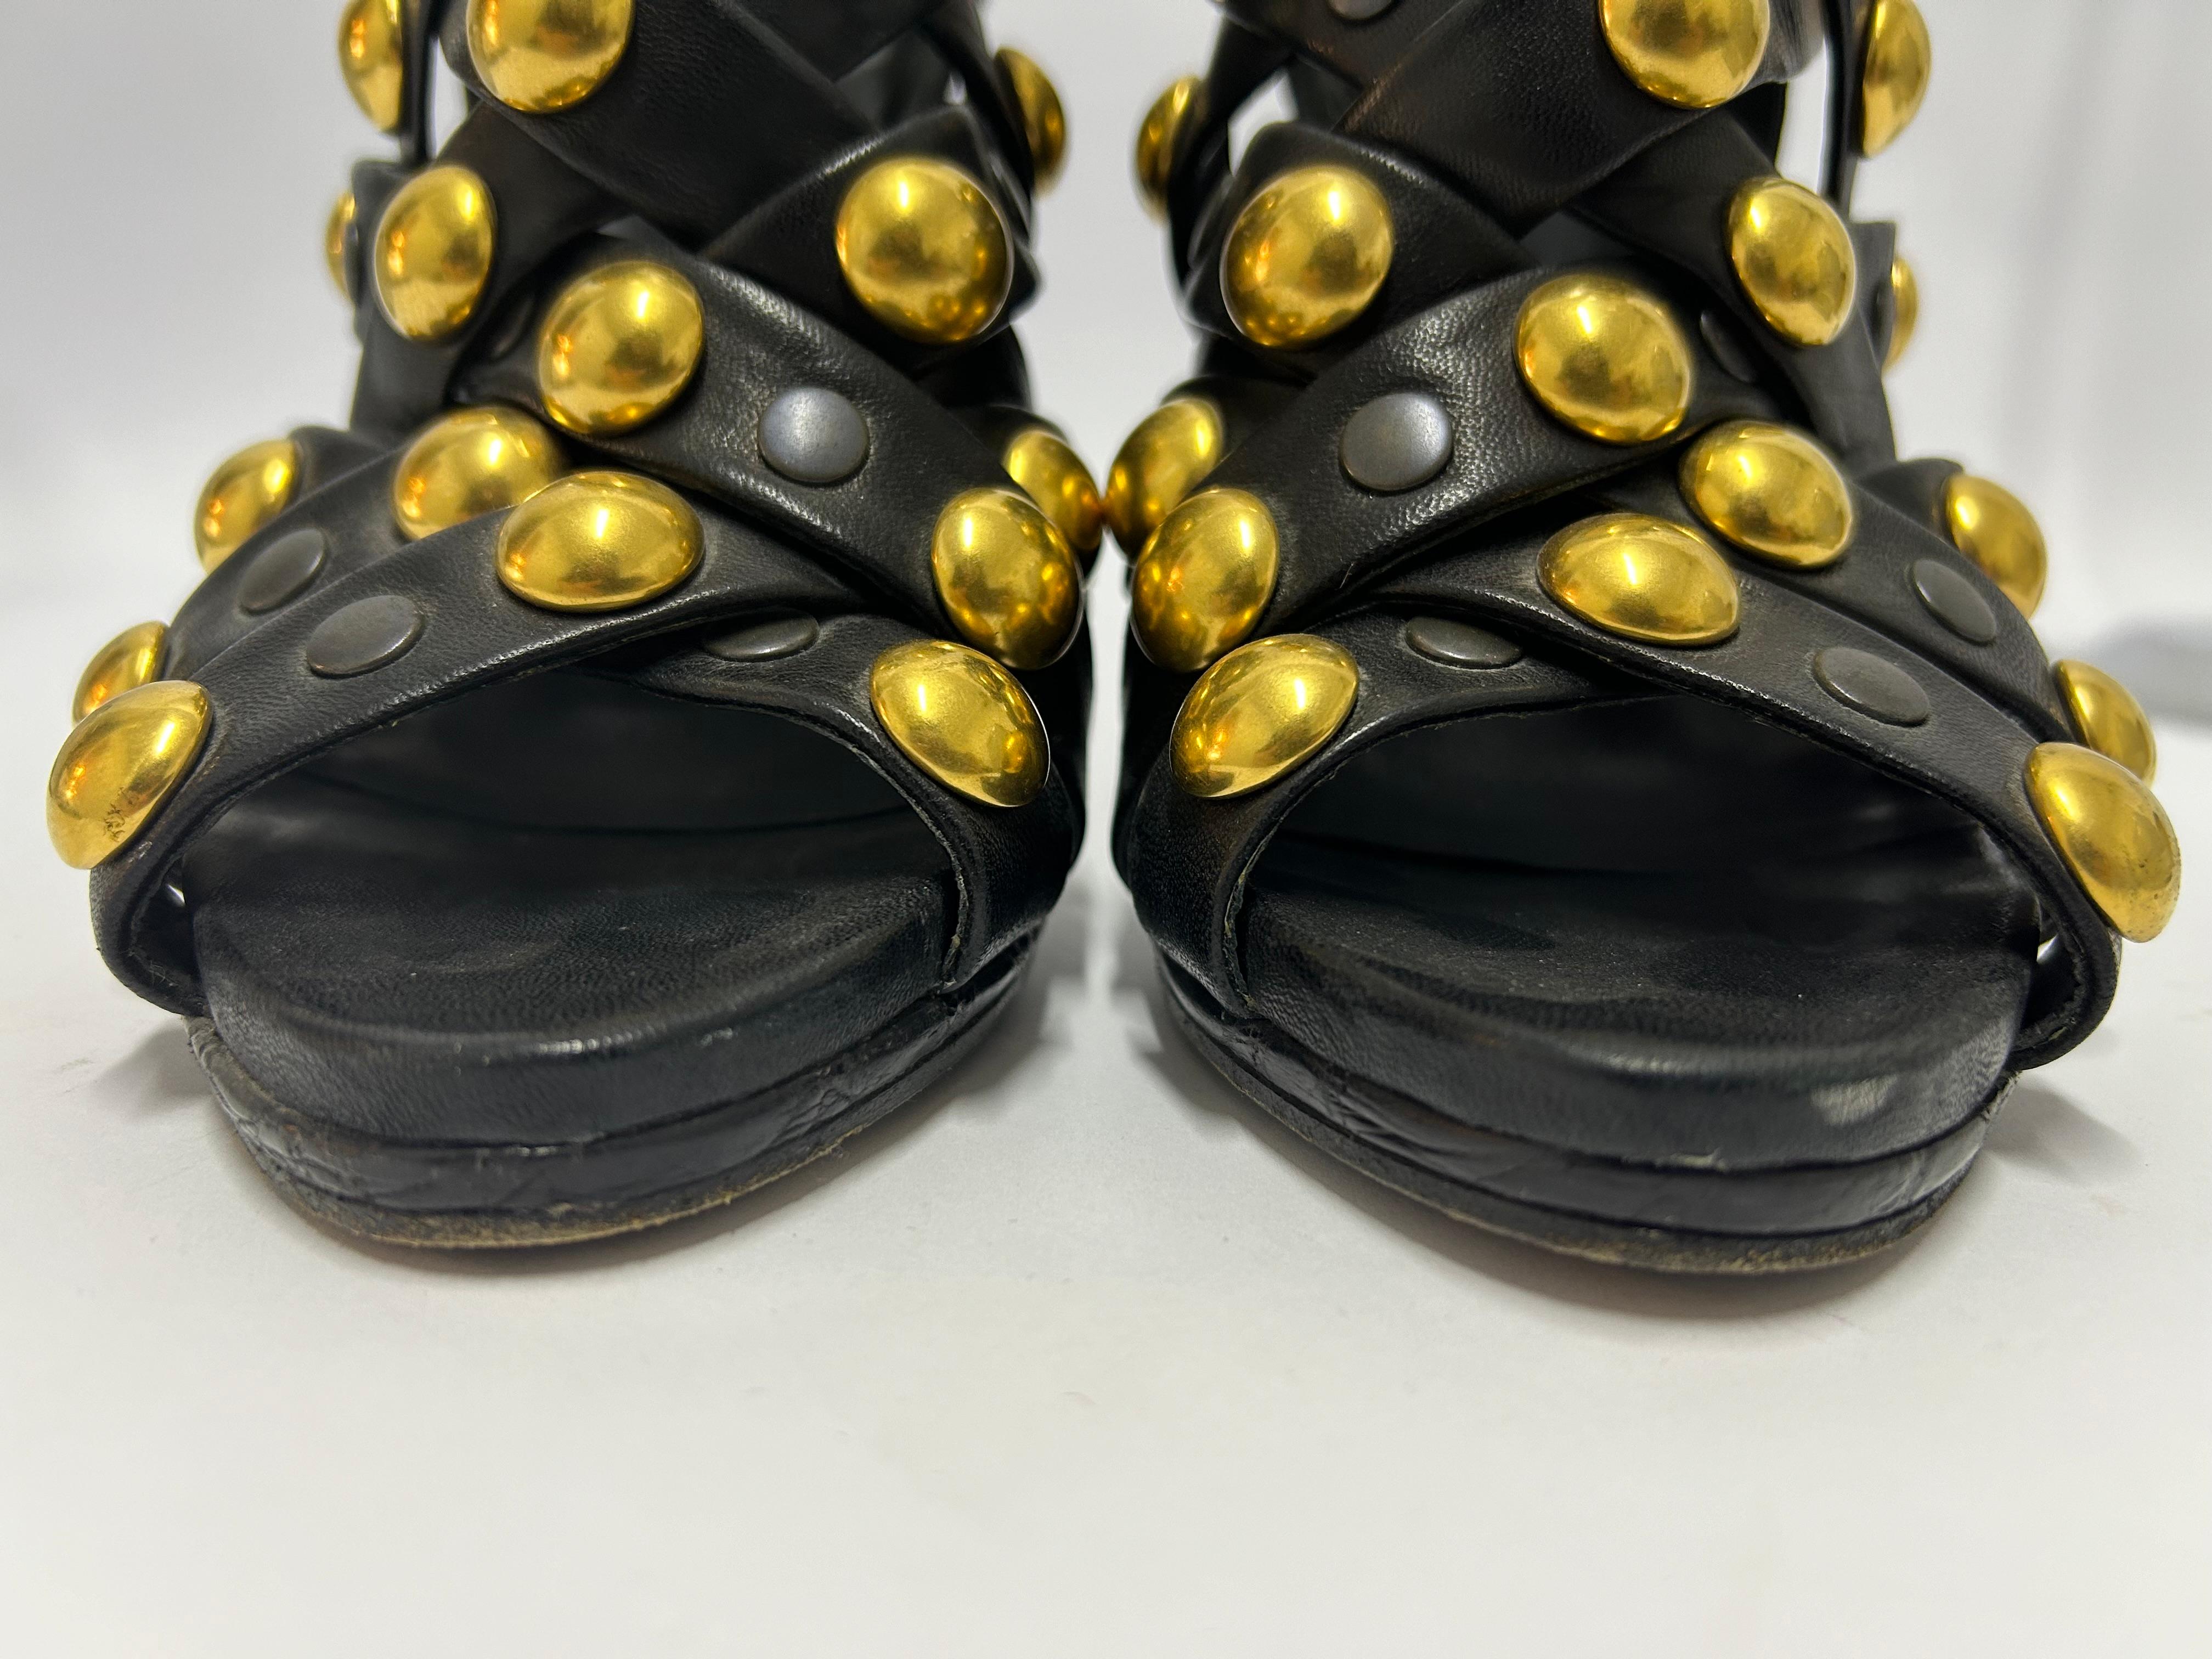 Gucci Black Leather Babouska Crisscross Booties Size EU 37 For Sale 3